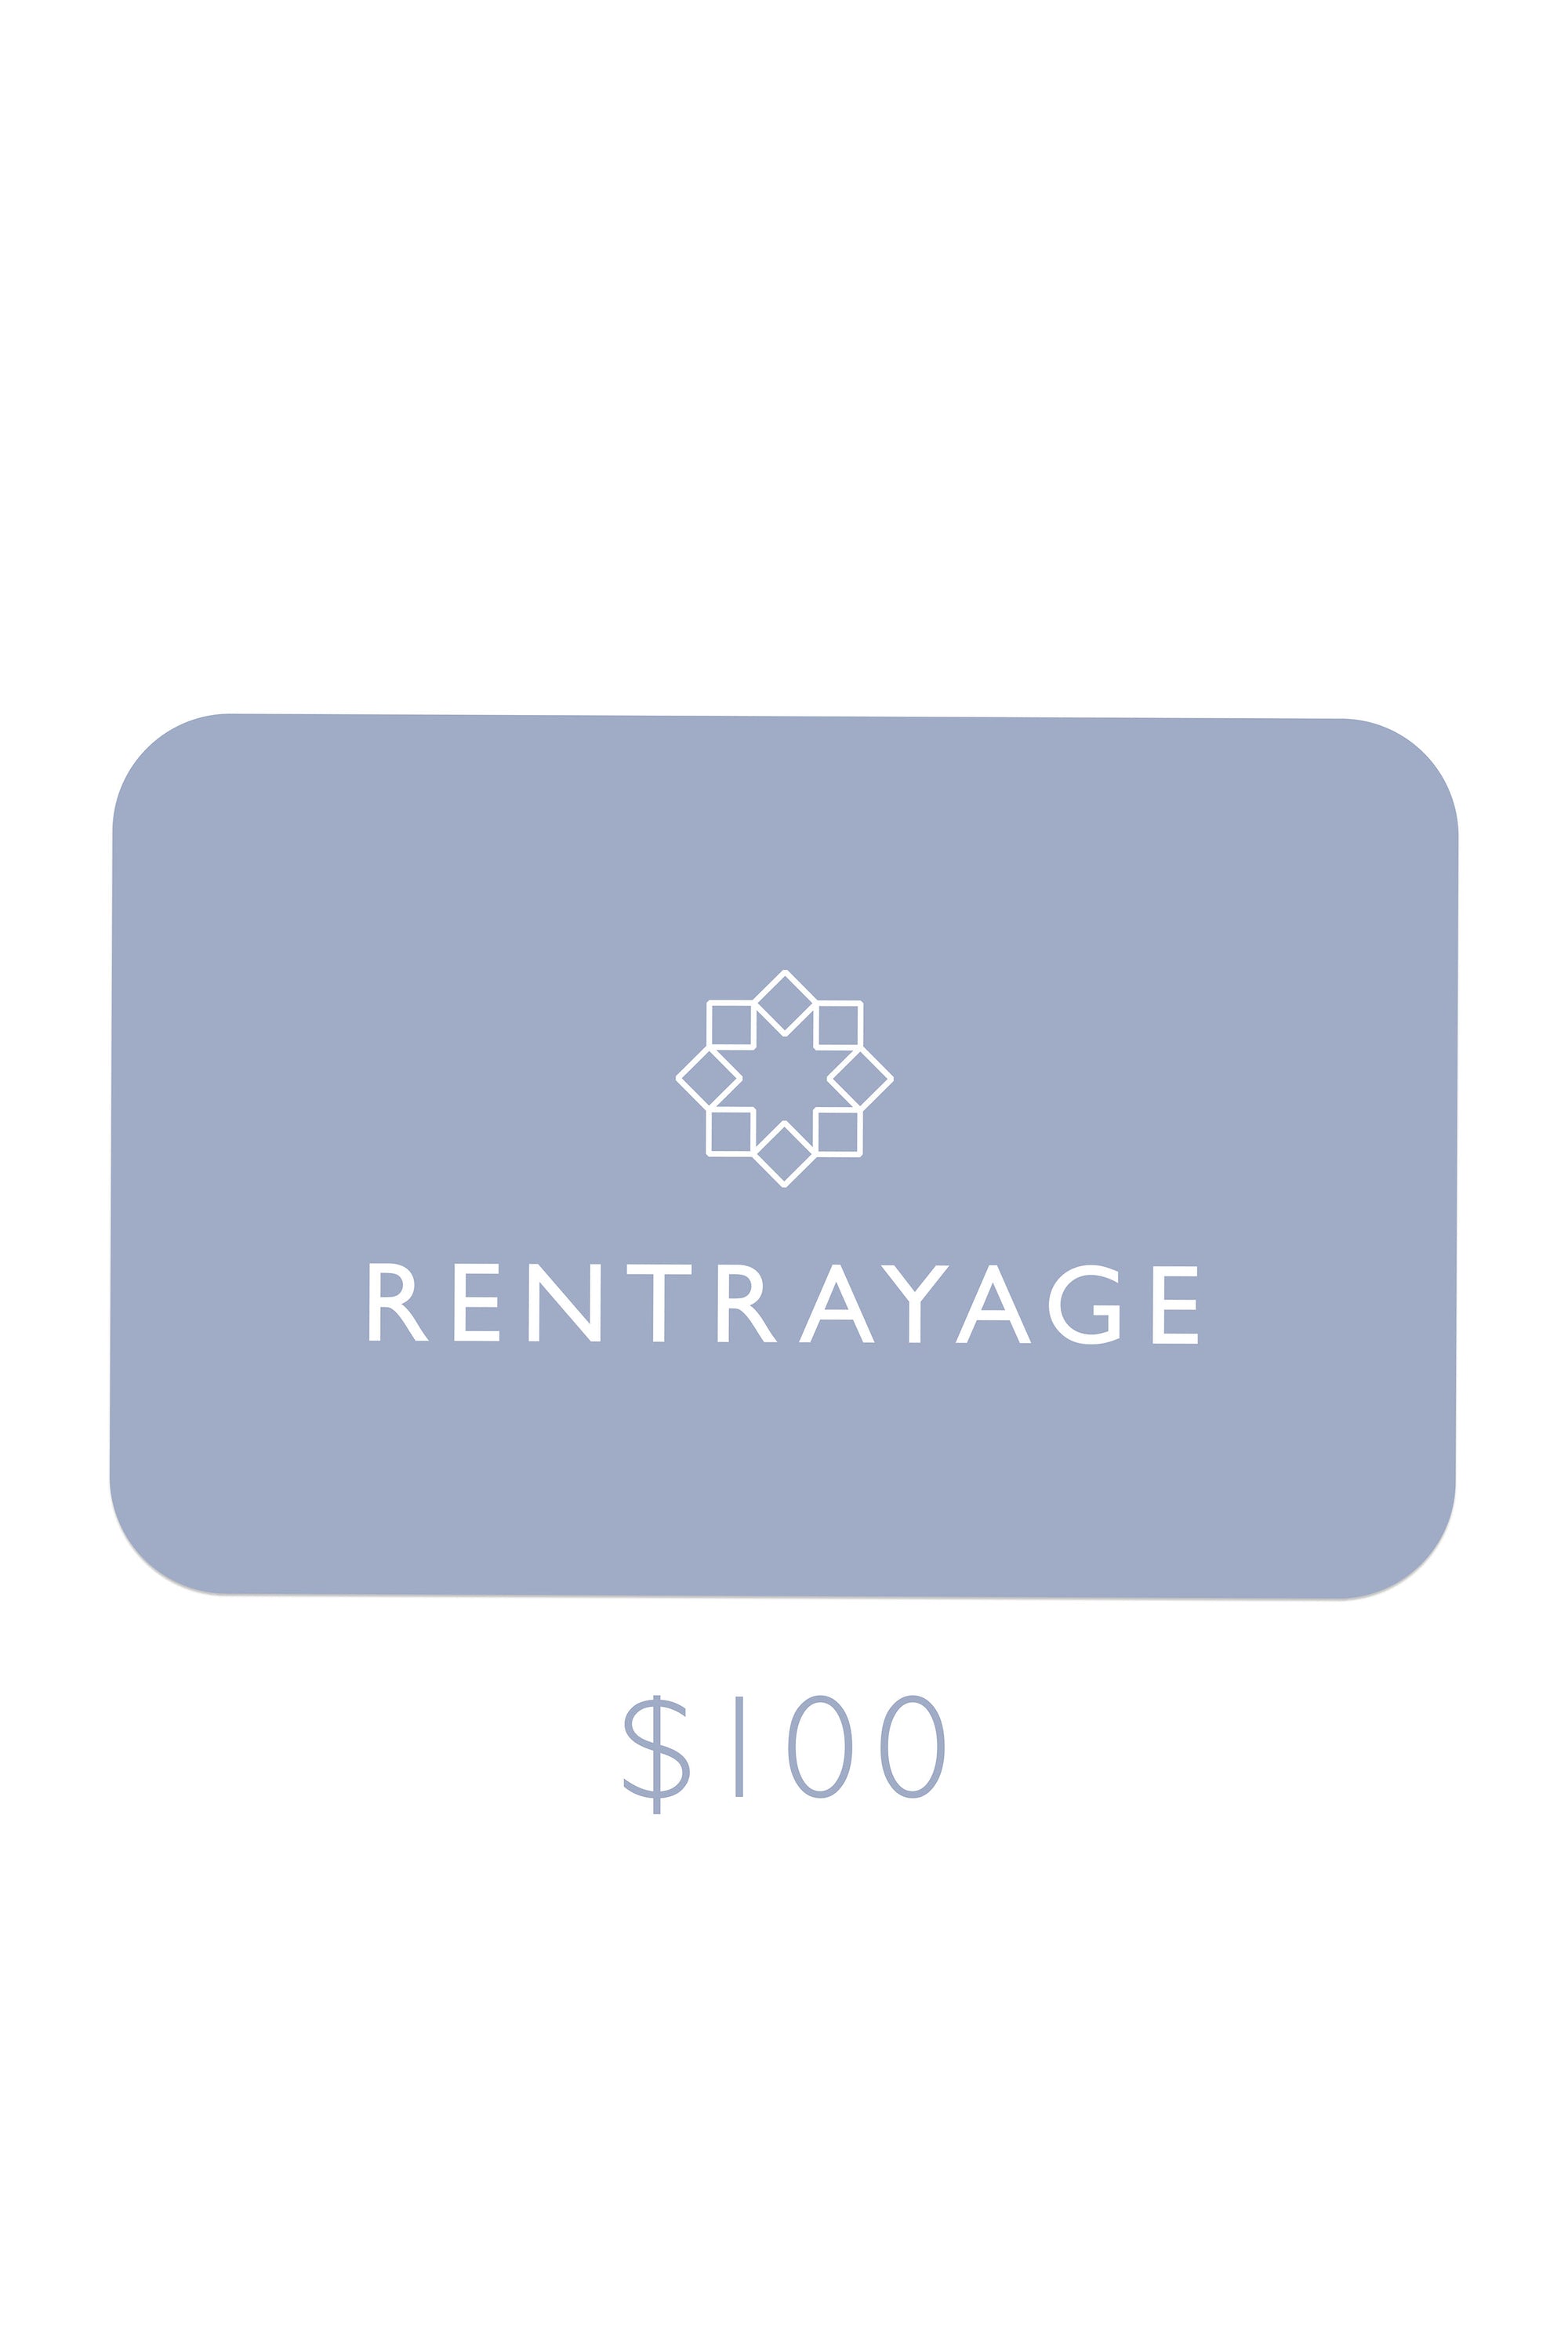 Rentrayage Gift Card $100